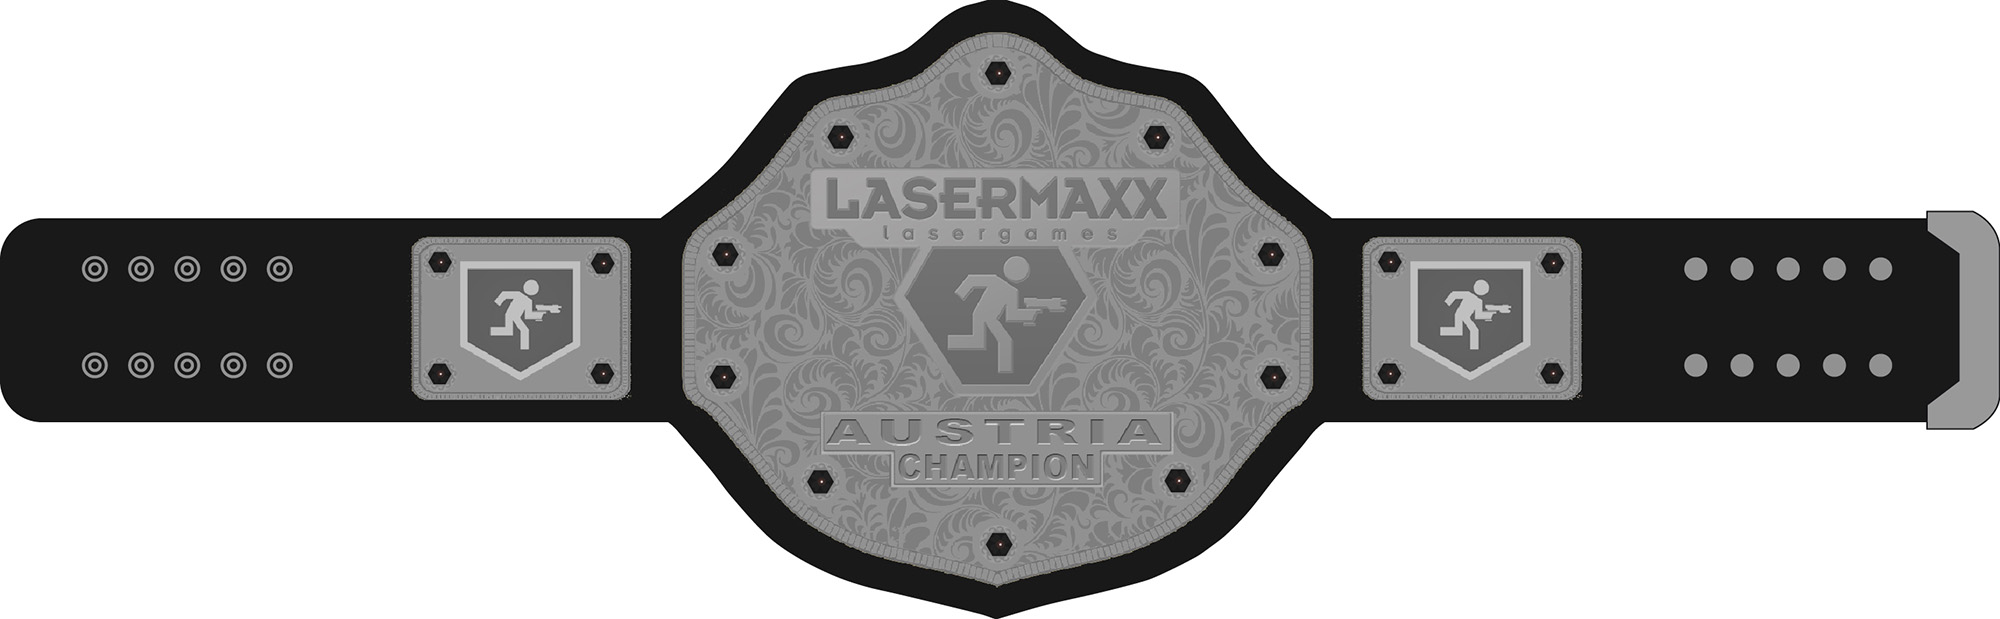 Lasermaxx Lasergames Lasertag Champion Gürtel